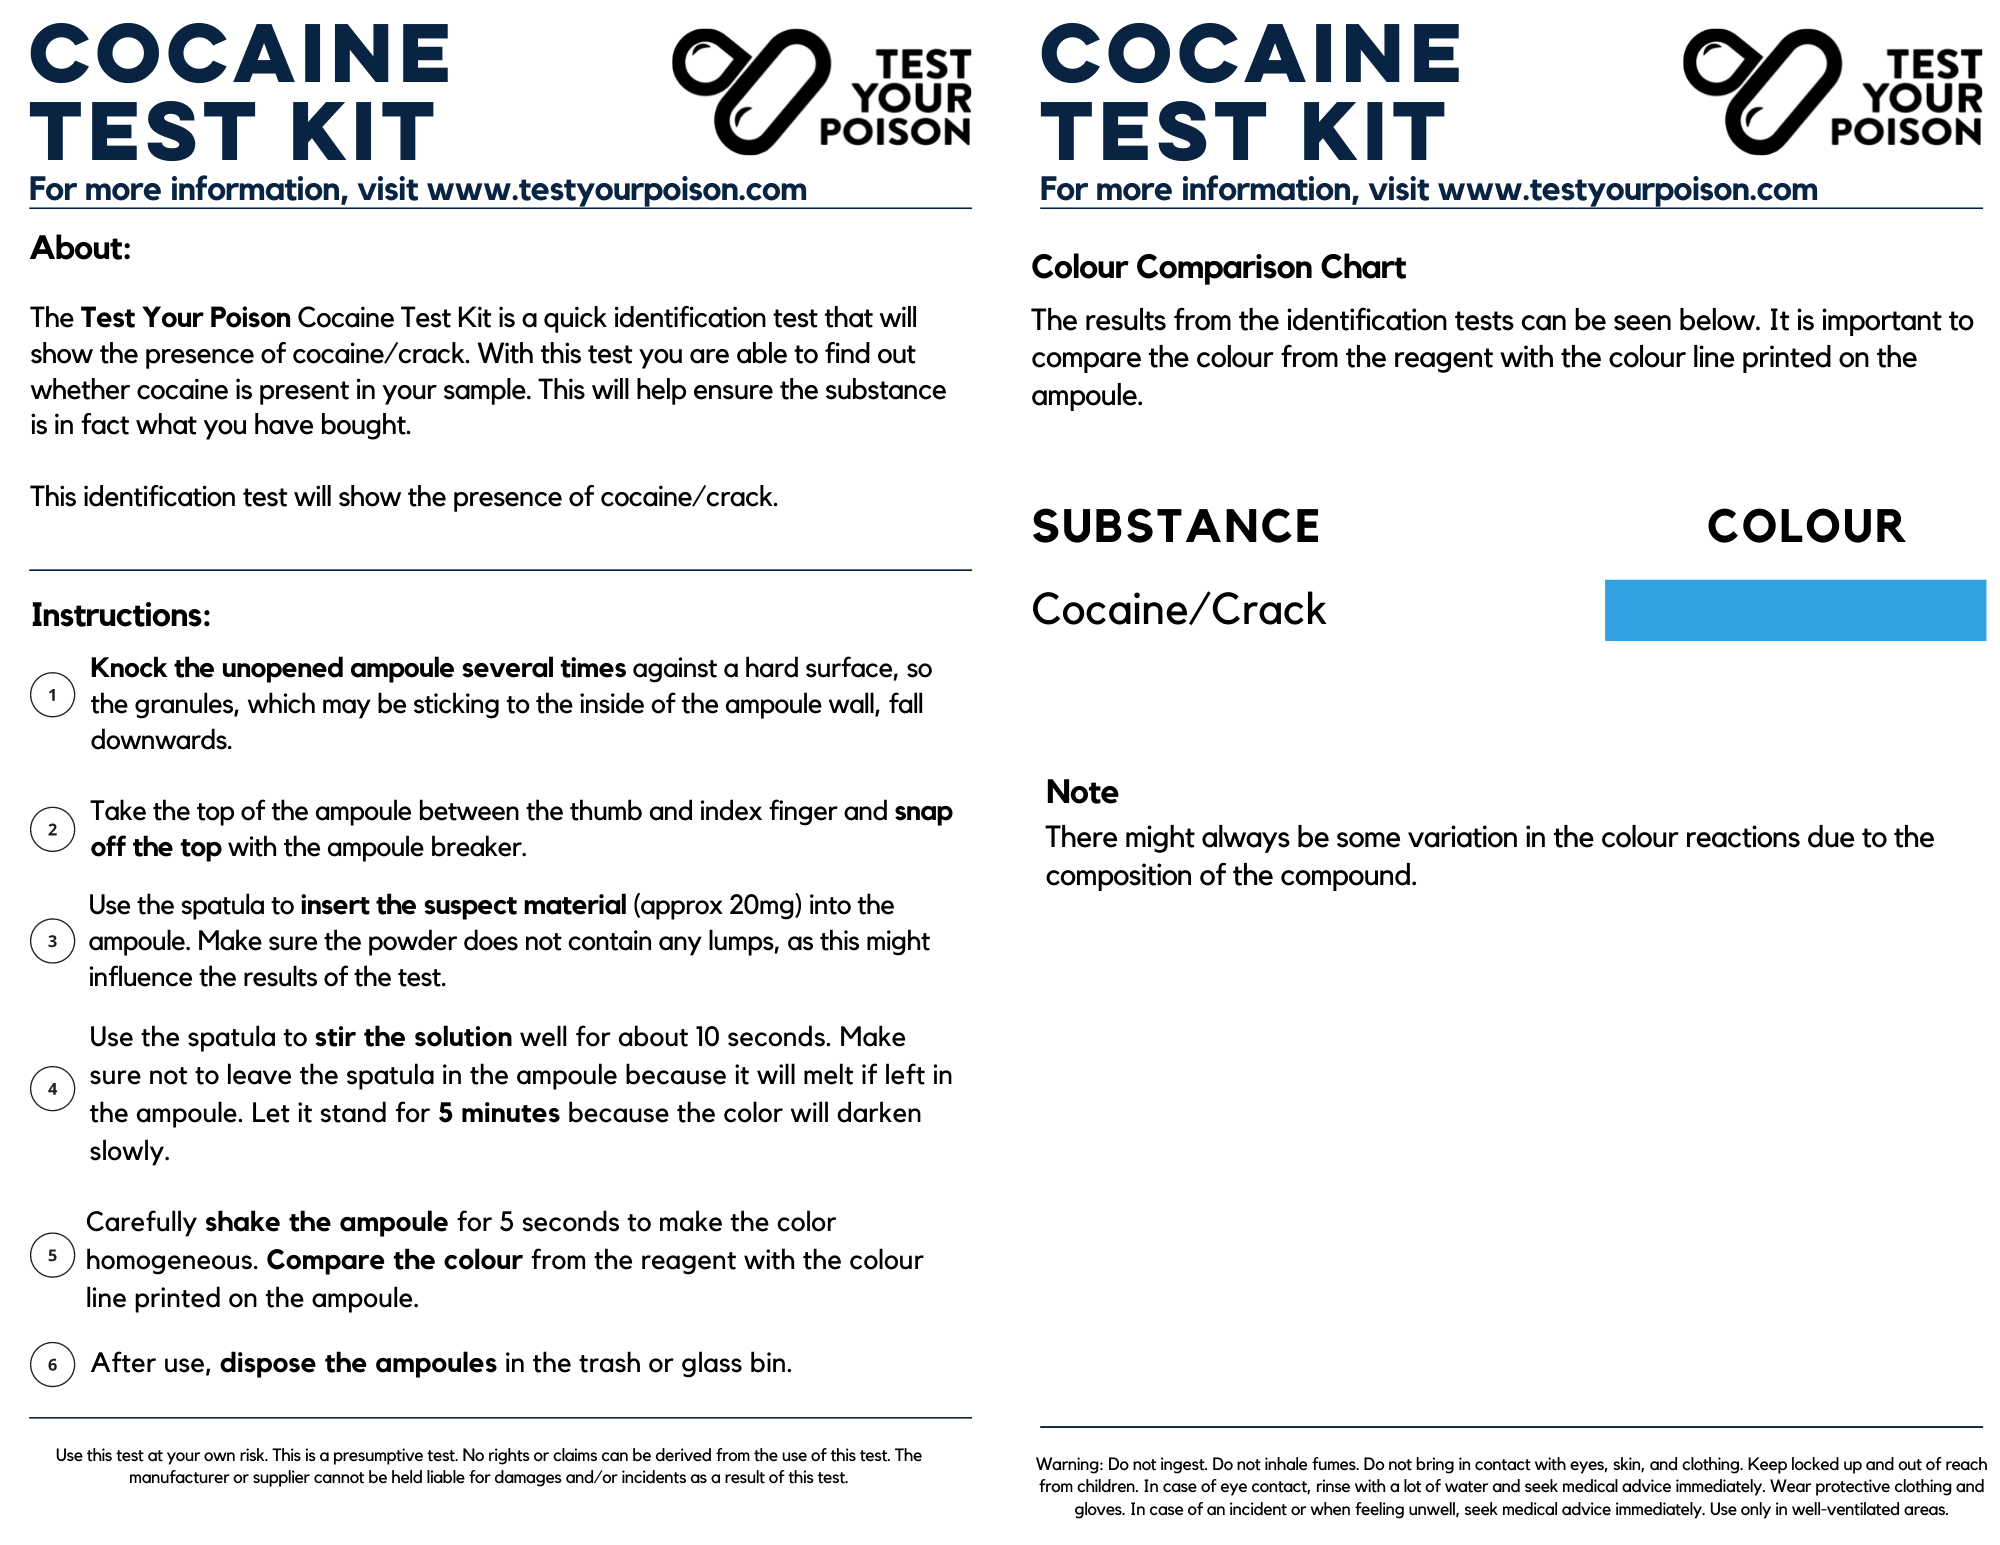 Cocaine Test Kit Instructions